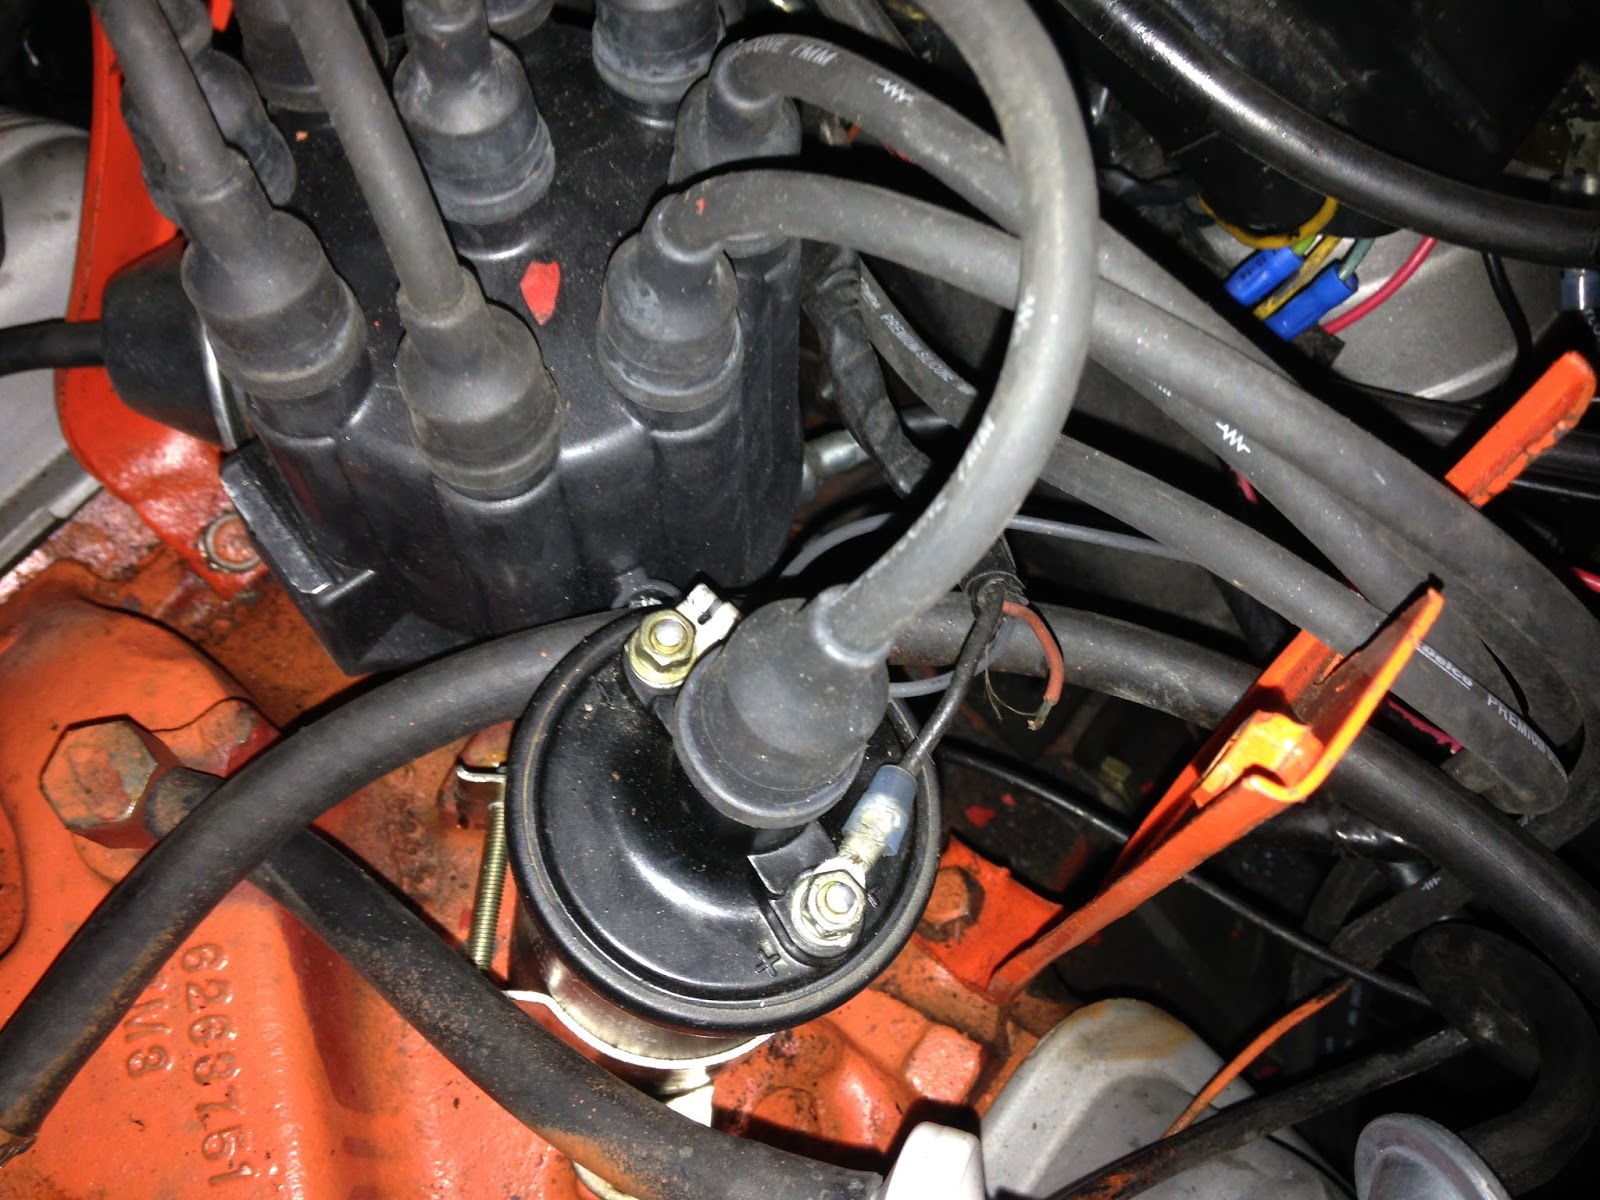 1972 350 coil wiring.? - CorvetteForum - Chevrolet Corvette Forum